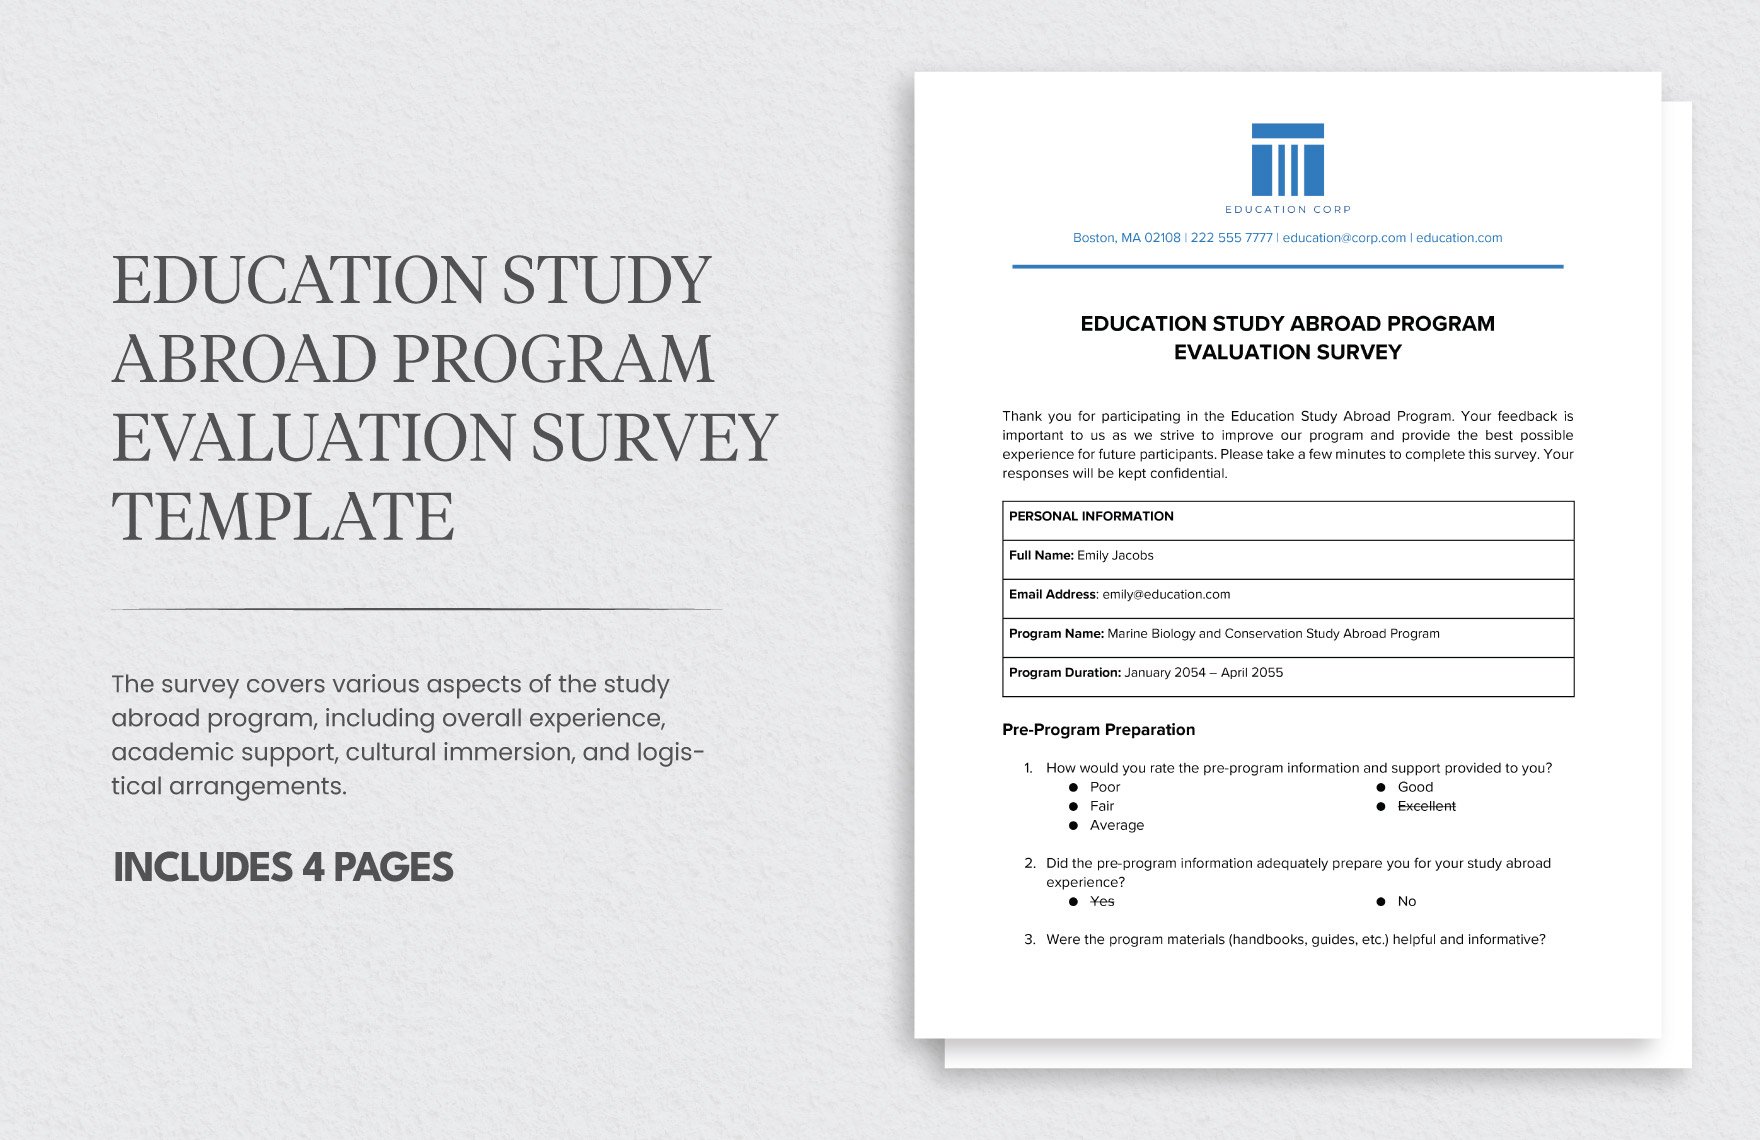 Education Study Abroad Program Evaluation Survey Template in Word, Google Docs, PDF